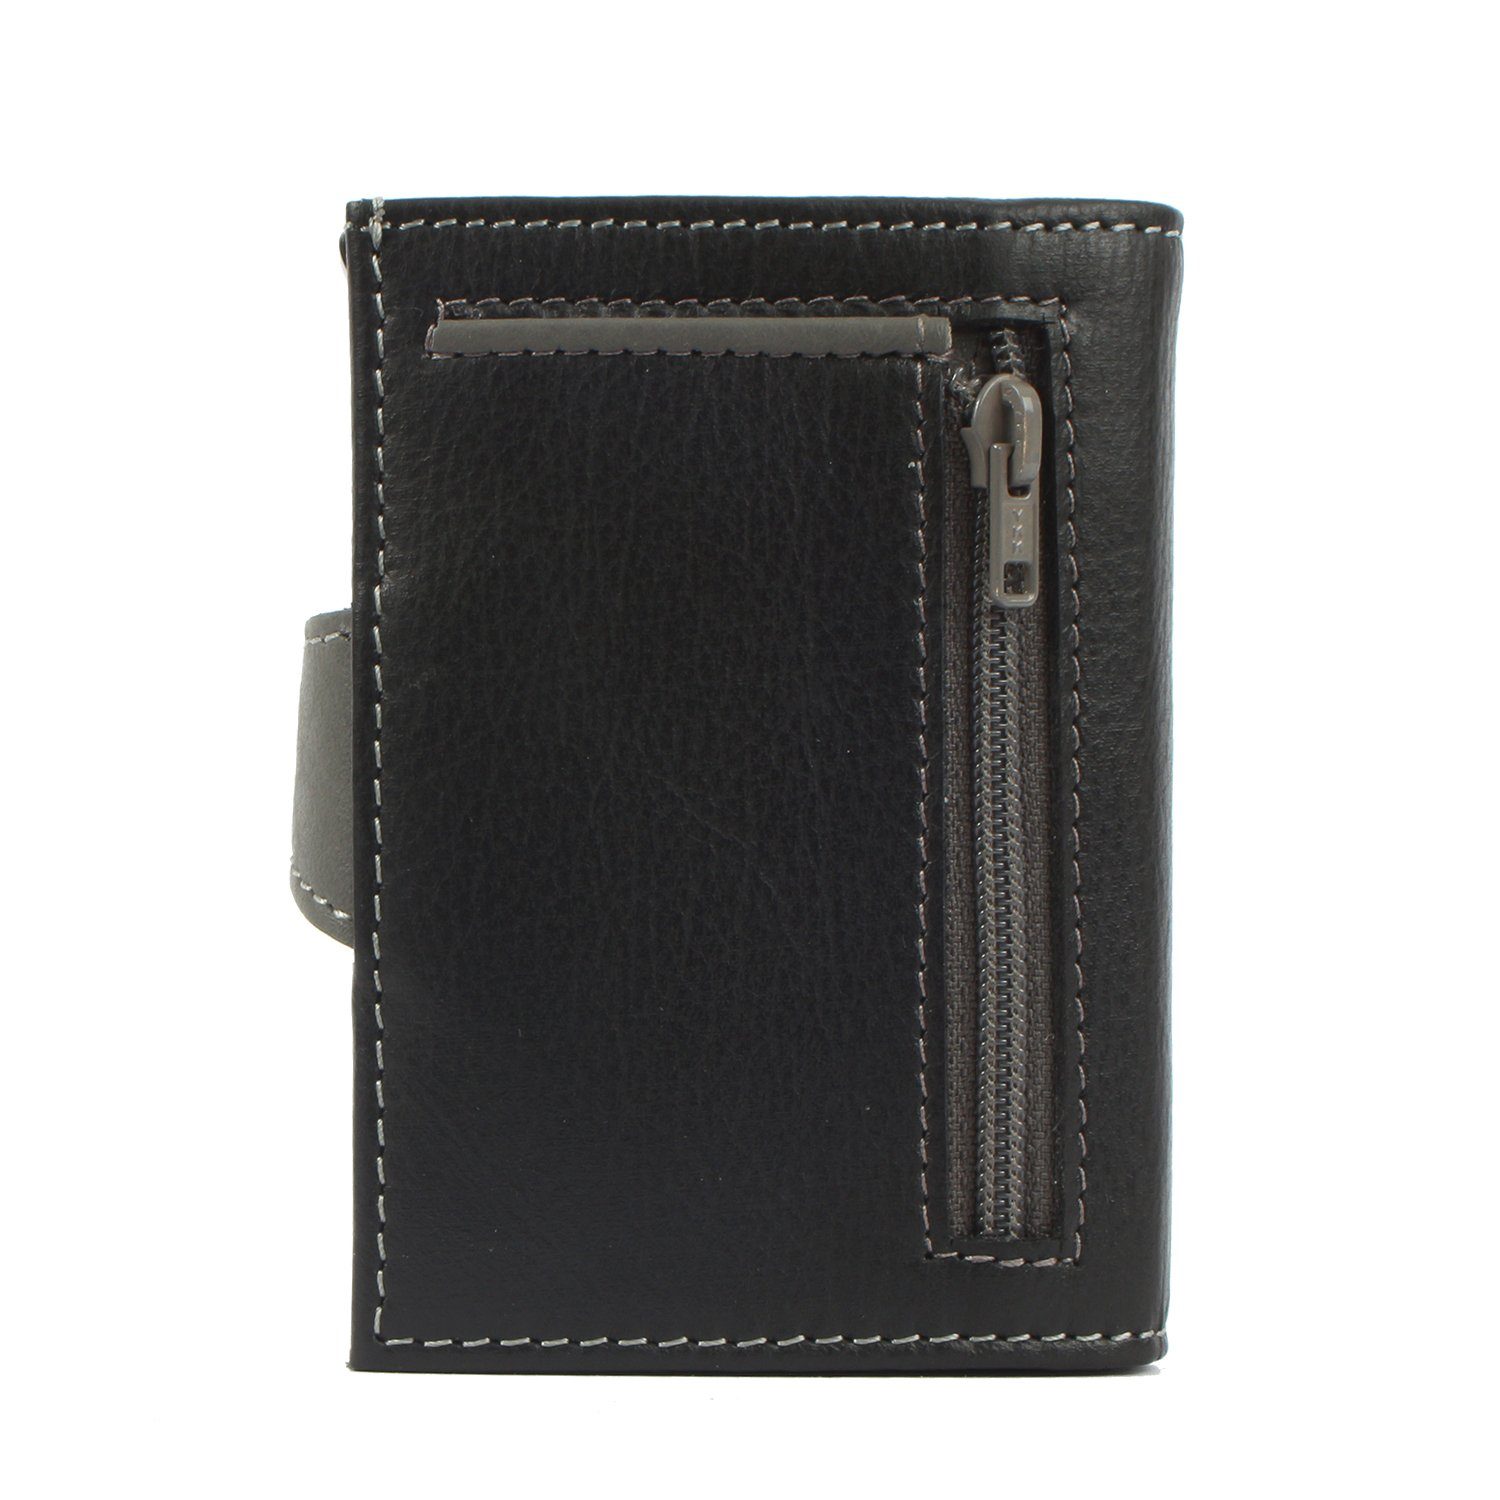 aus Margelisch Mini noonyu Leder Upcycling black Geldbörse RFID leather, Kreditkartenbörse double